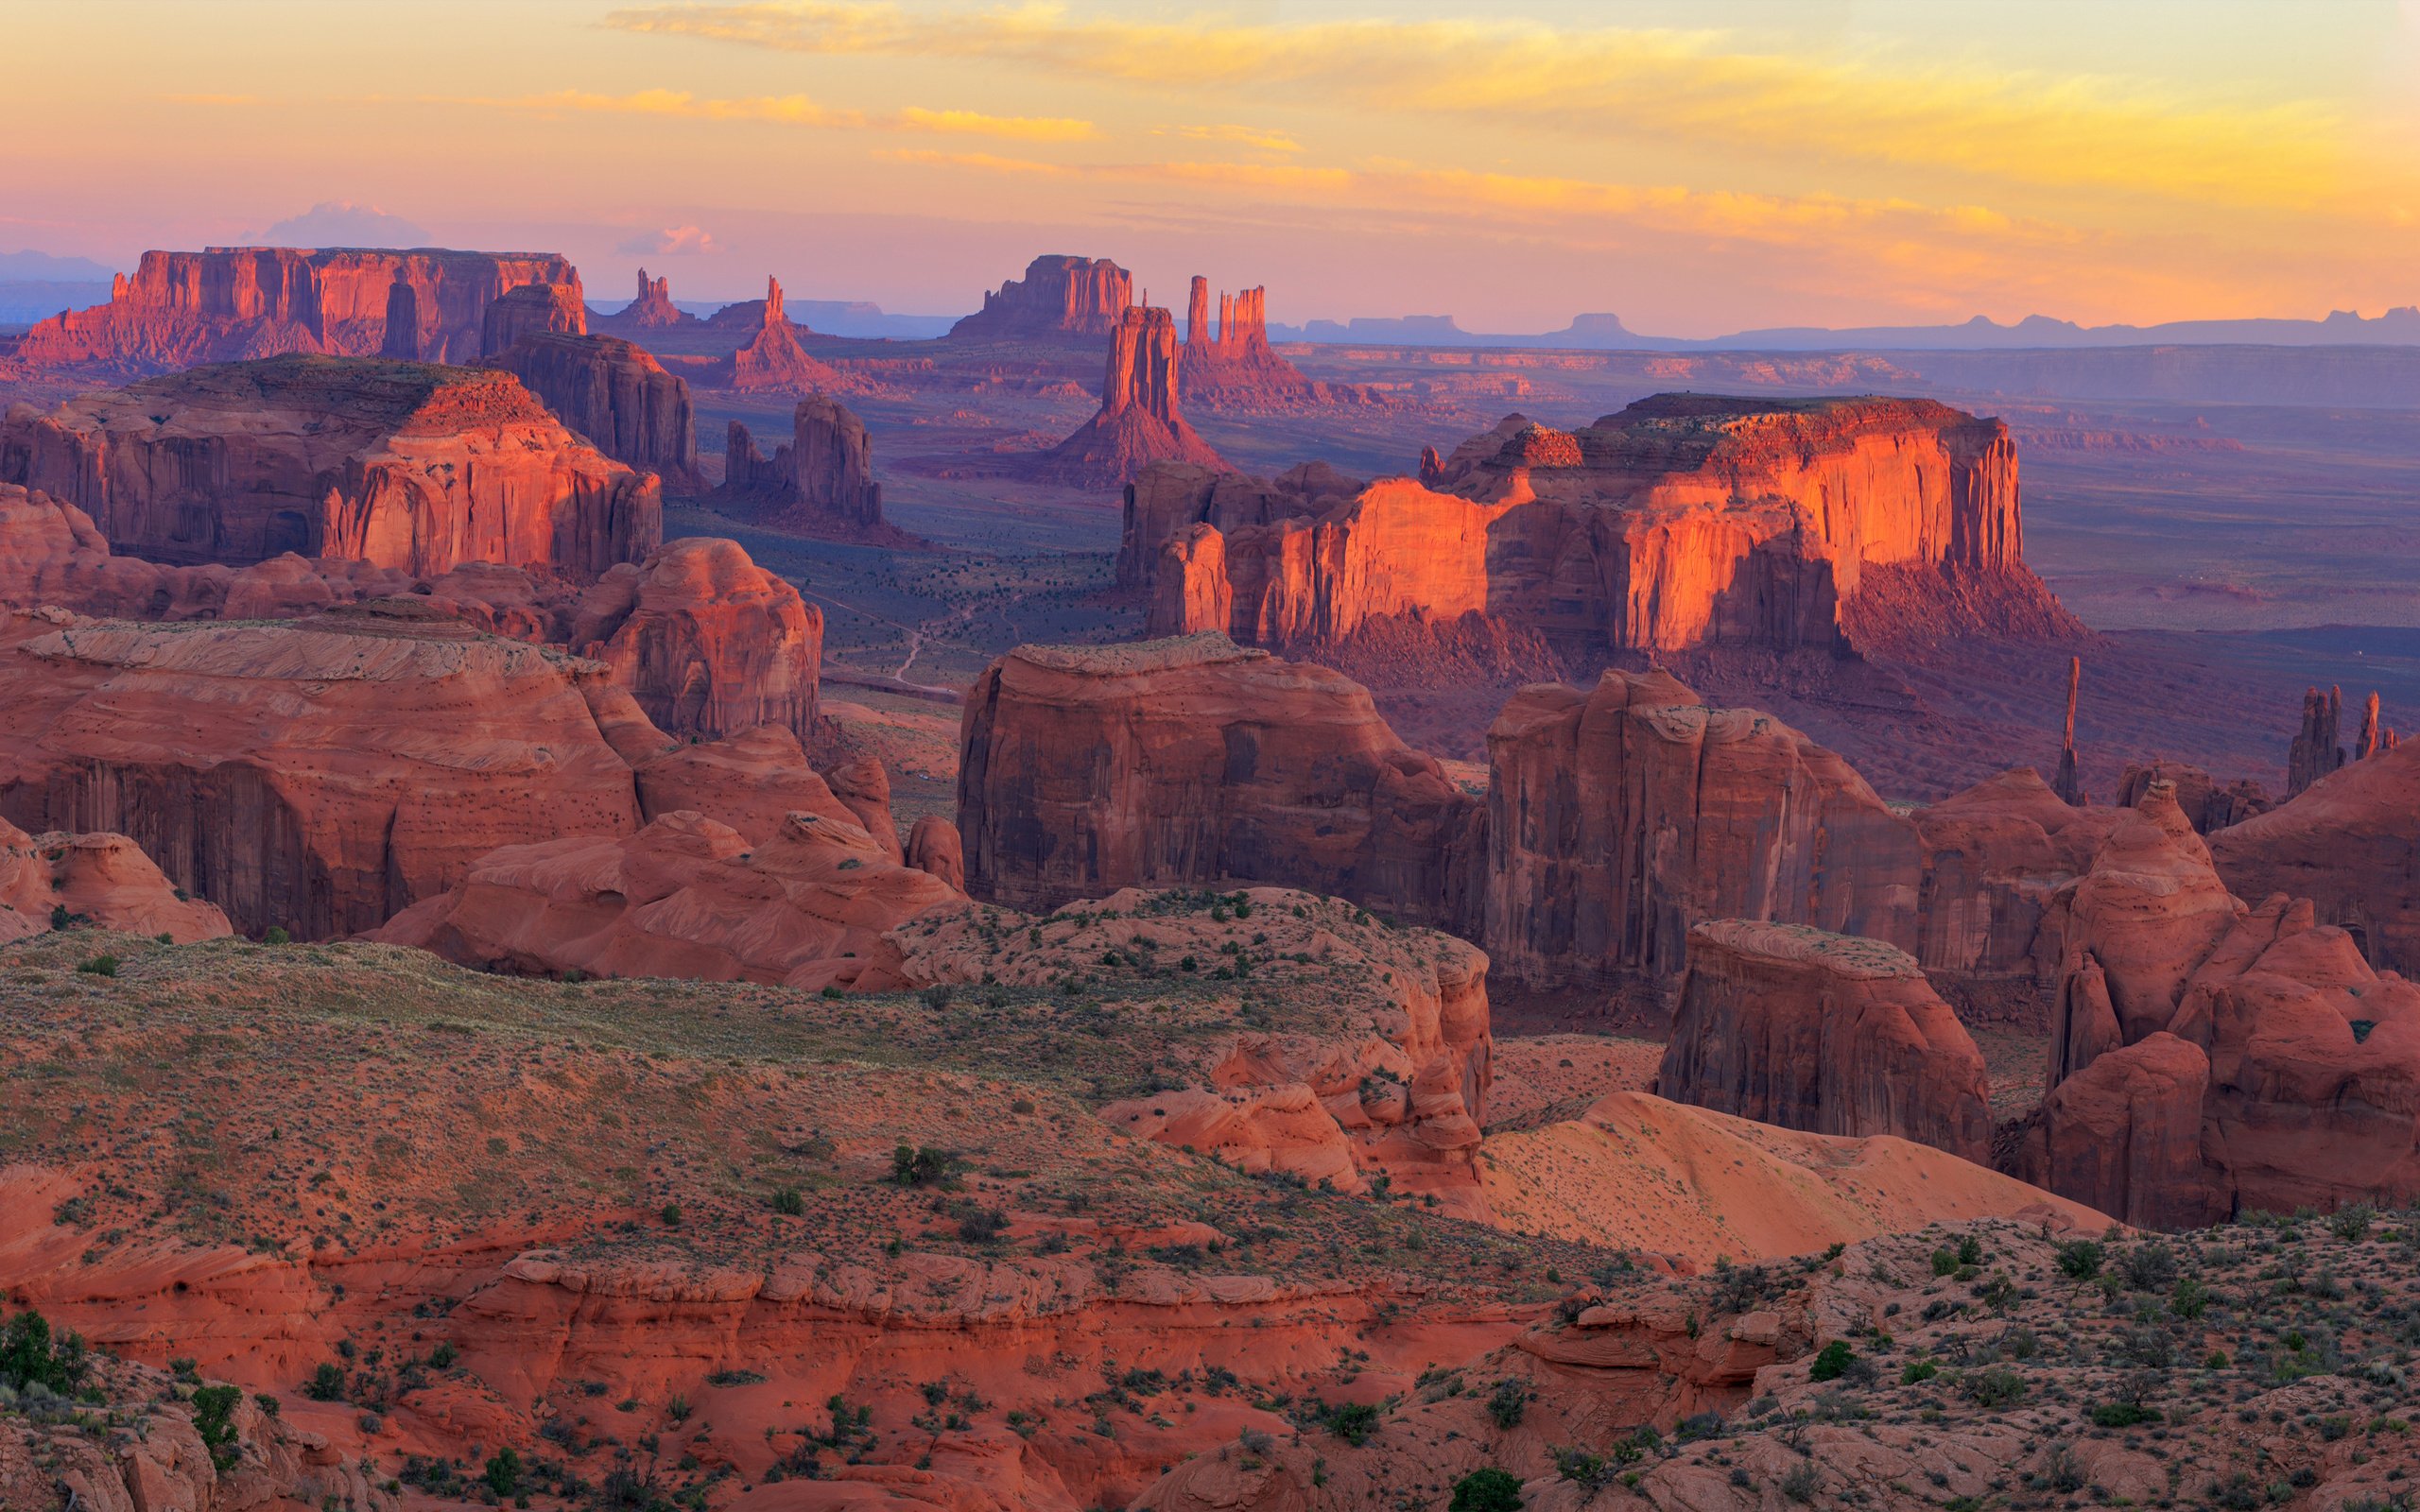 Обои скалы, grand canyon national park, камни, закат, панорама, каньон, сша, аризона, гранд-каньон, rocks, stones, sunset, panorama, canyon, usa, az, the grand canyon разрешение 4800x2200 Загрузить